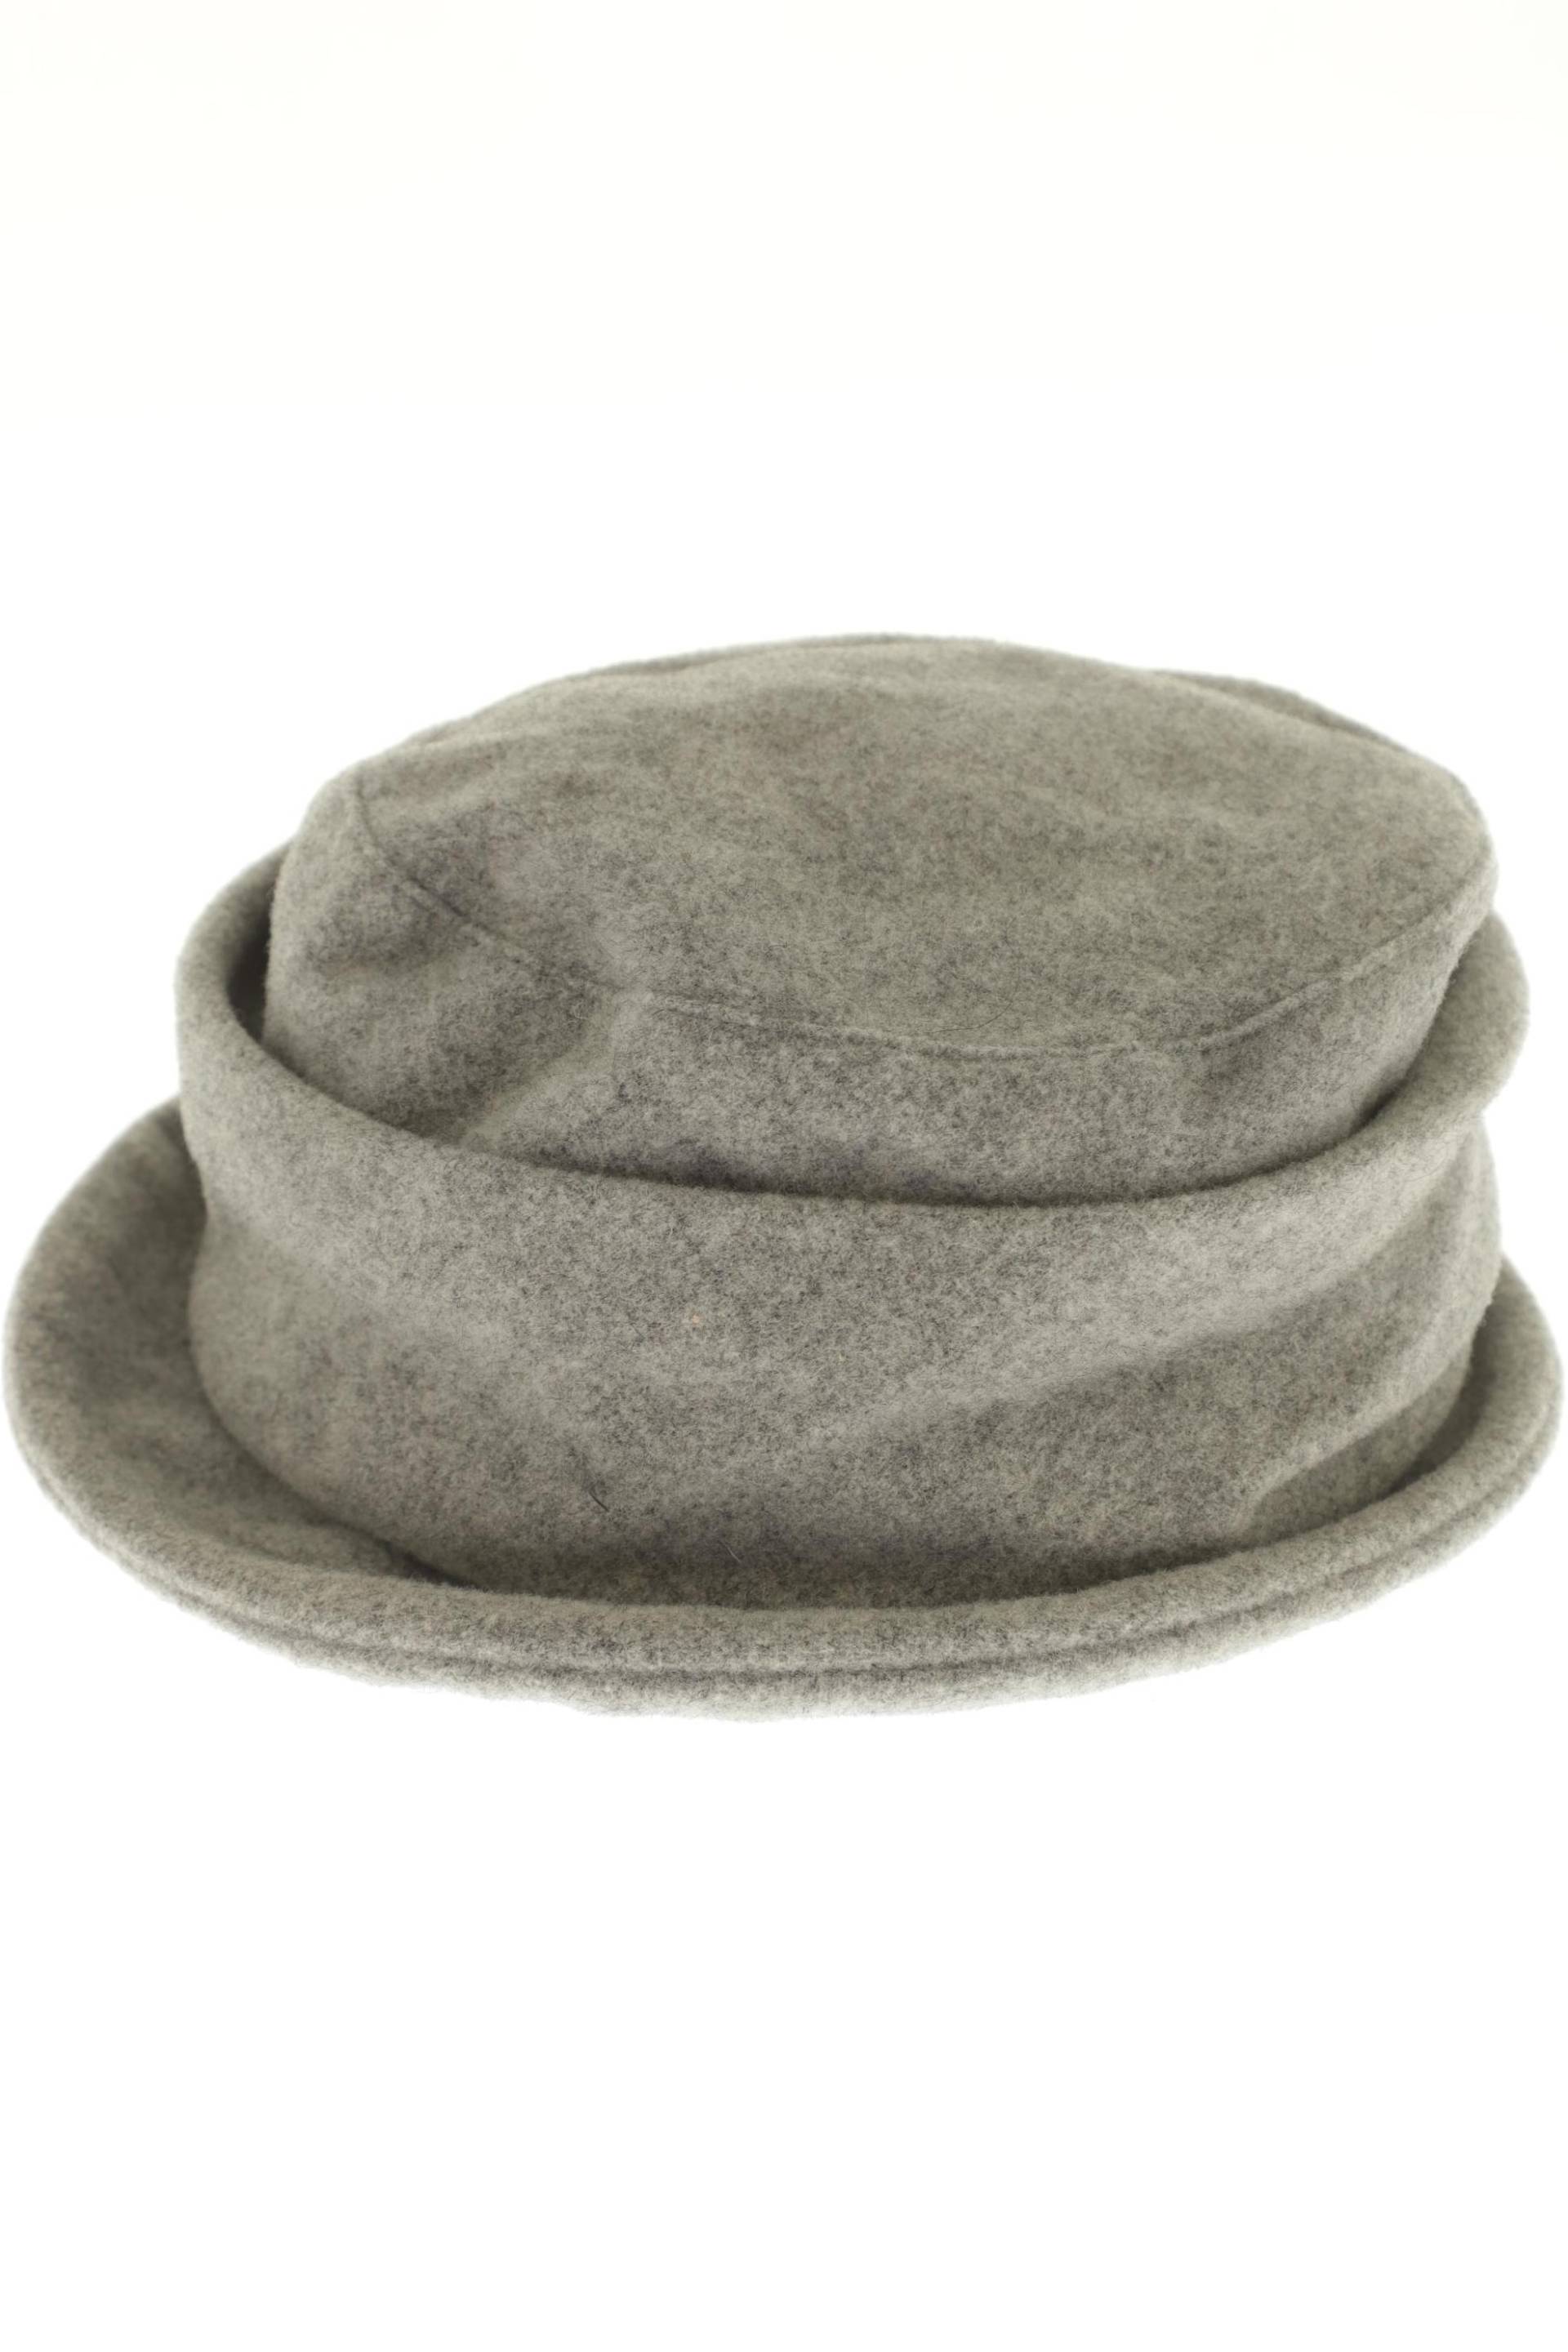 hessnatur Damen Hut/Mütze, grau von hessnatur